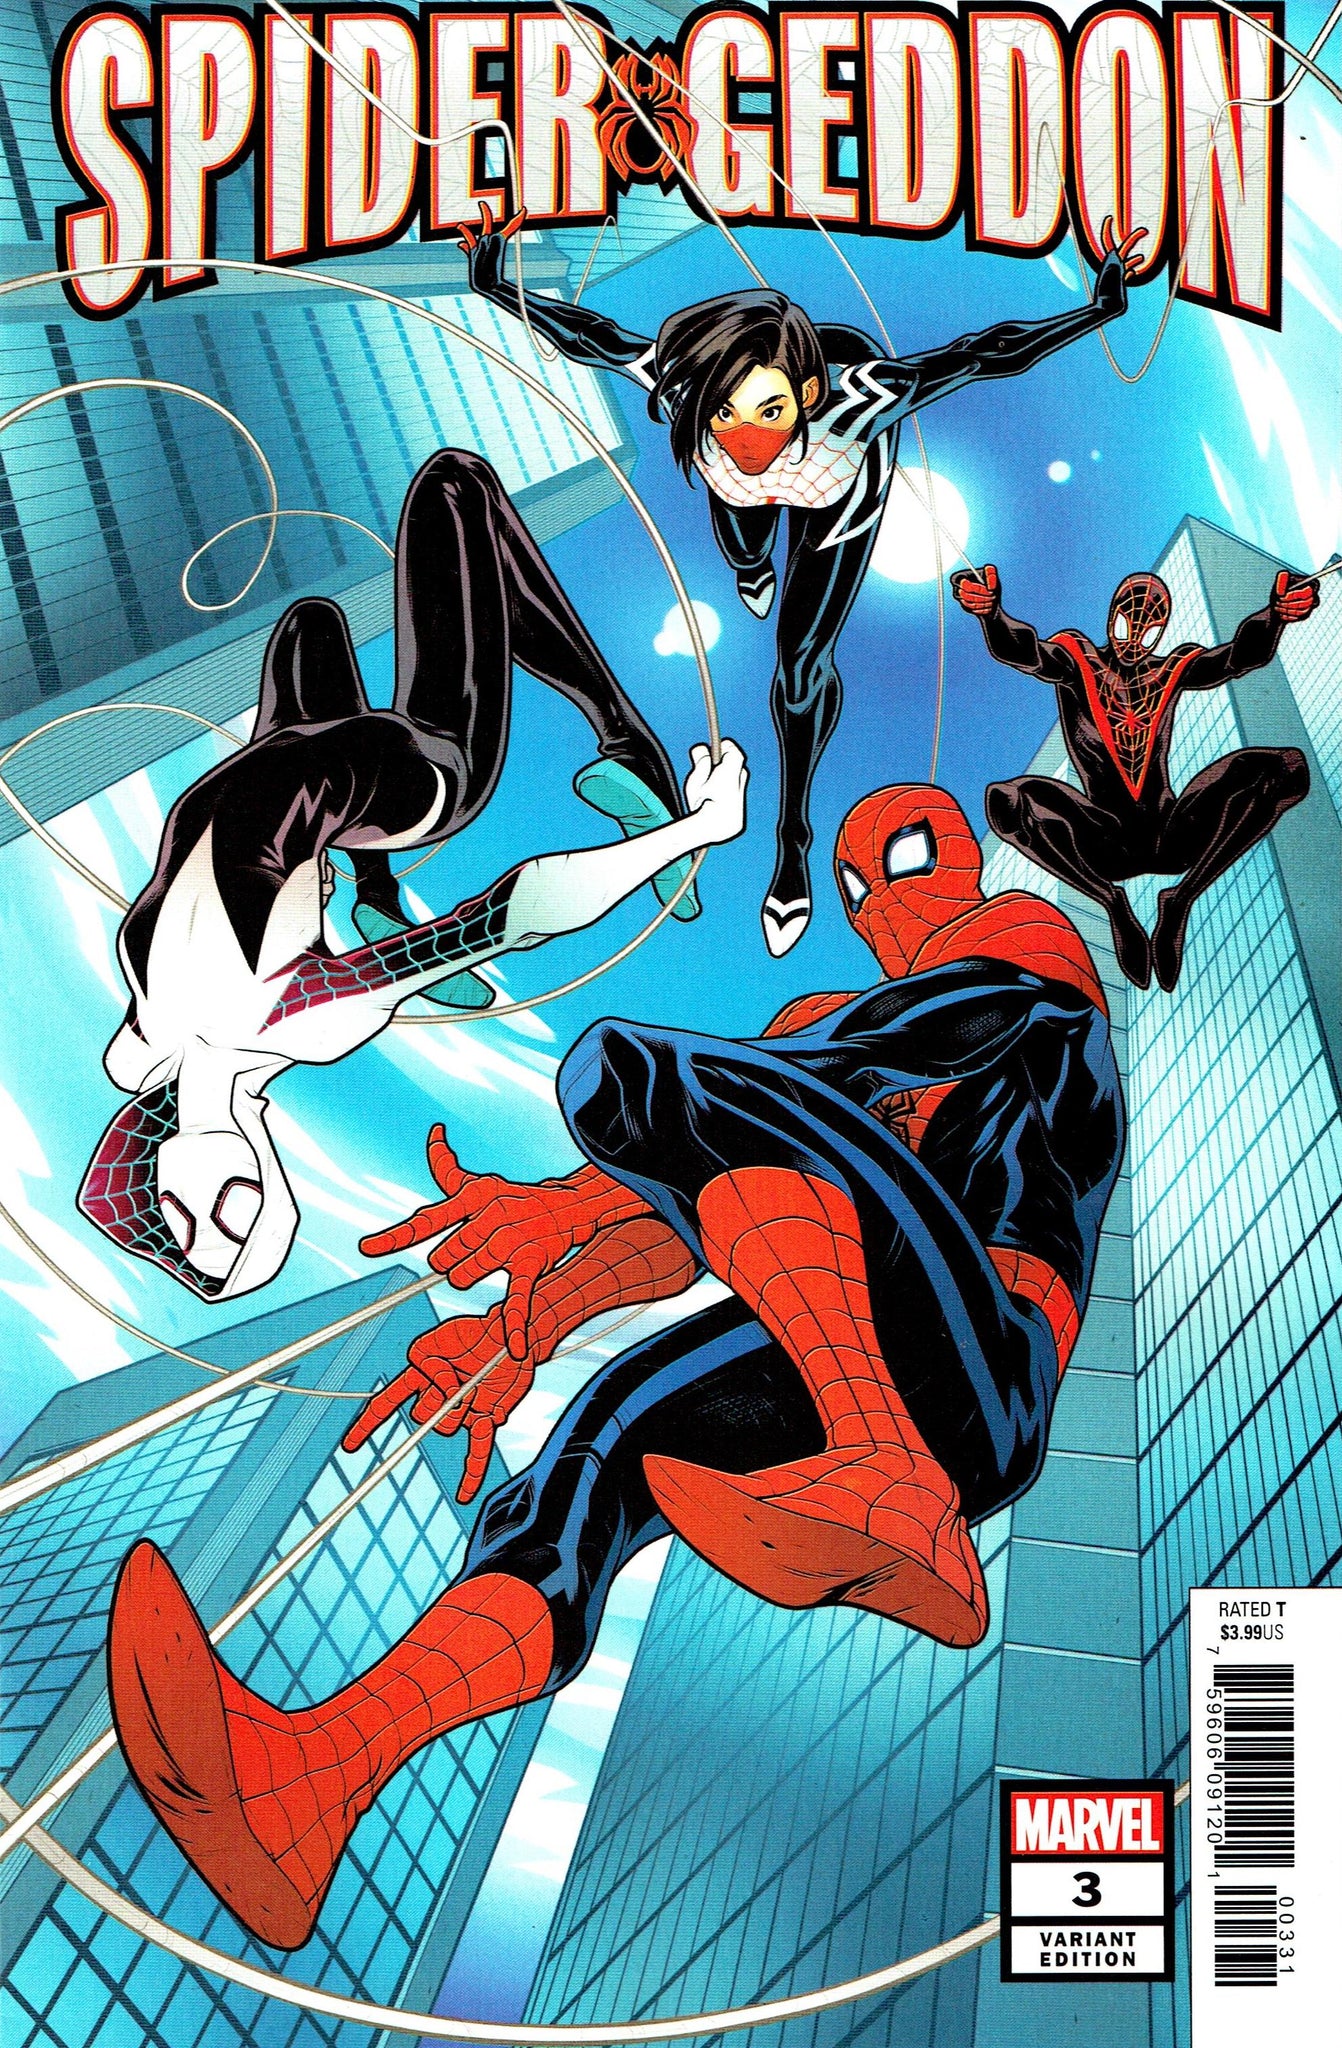 Spider-Geddon (2018) #3 (of 5) Elizabeth Torque Variant